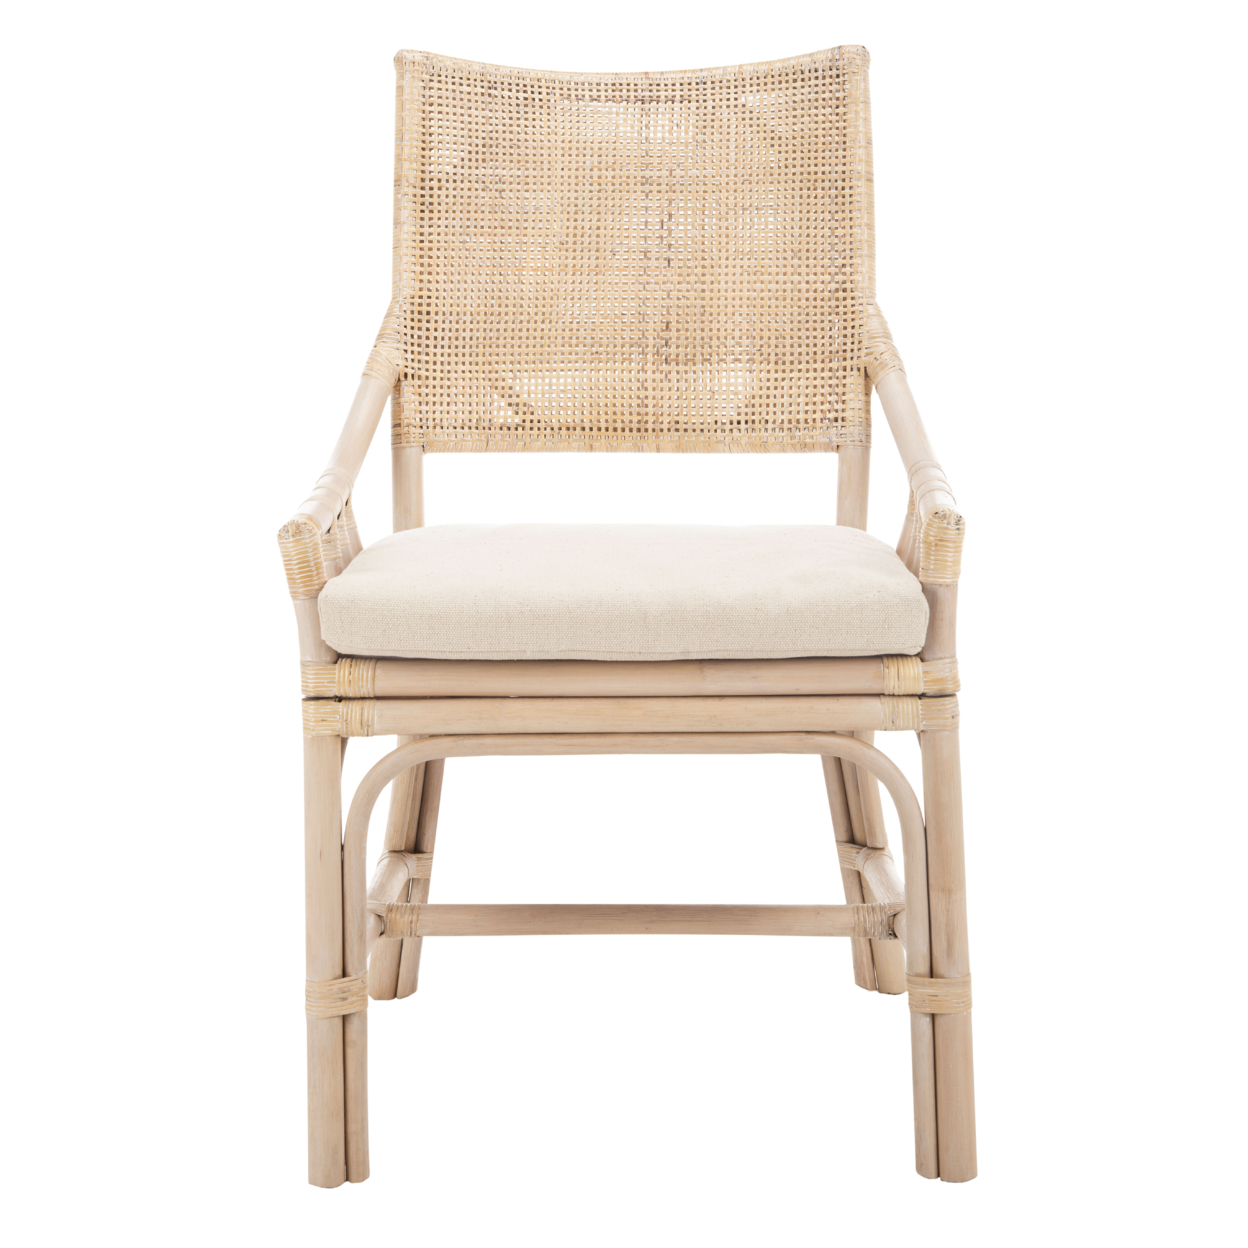 SAFAVIEH Donatella Rattan Chair Natural / White Washed